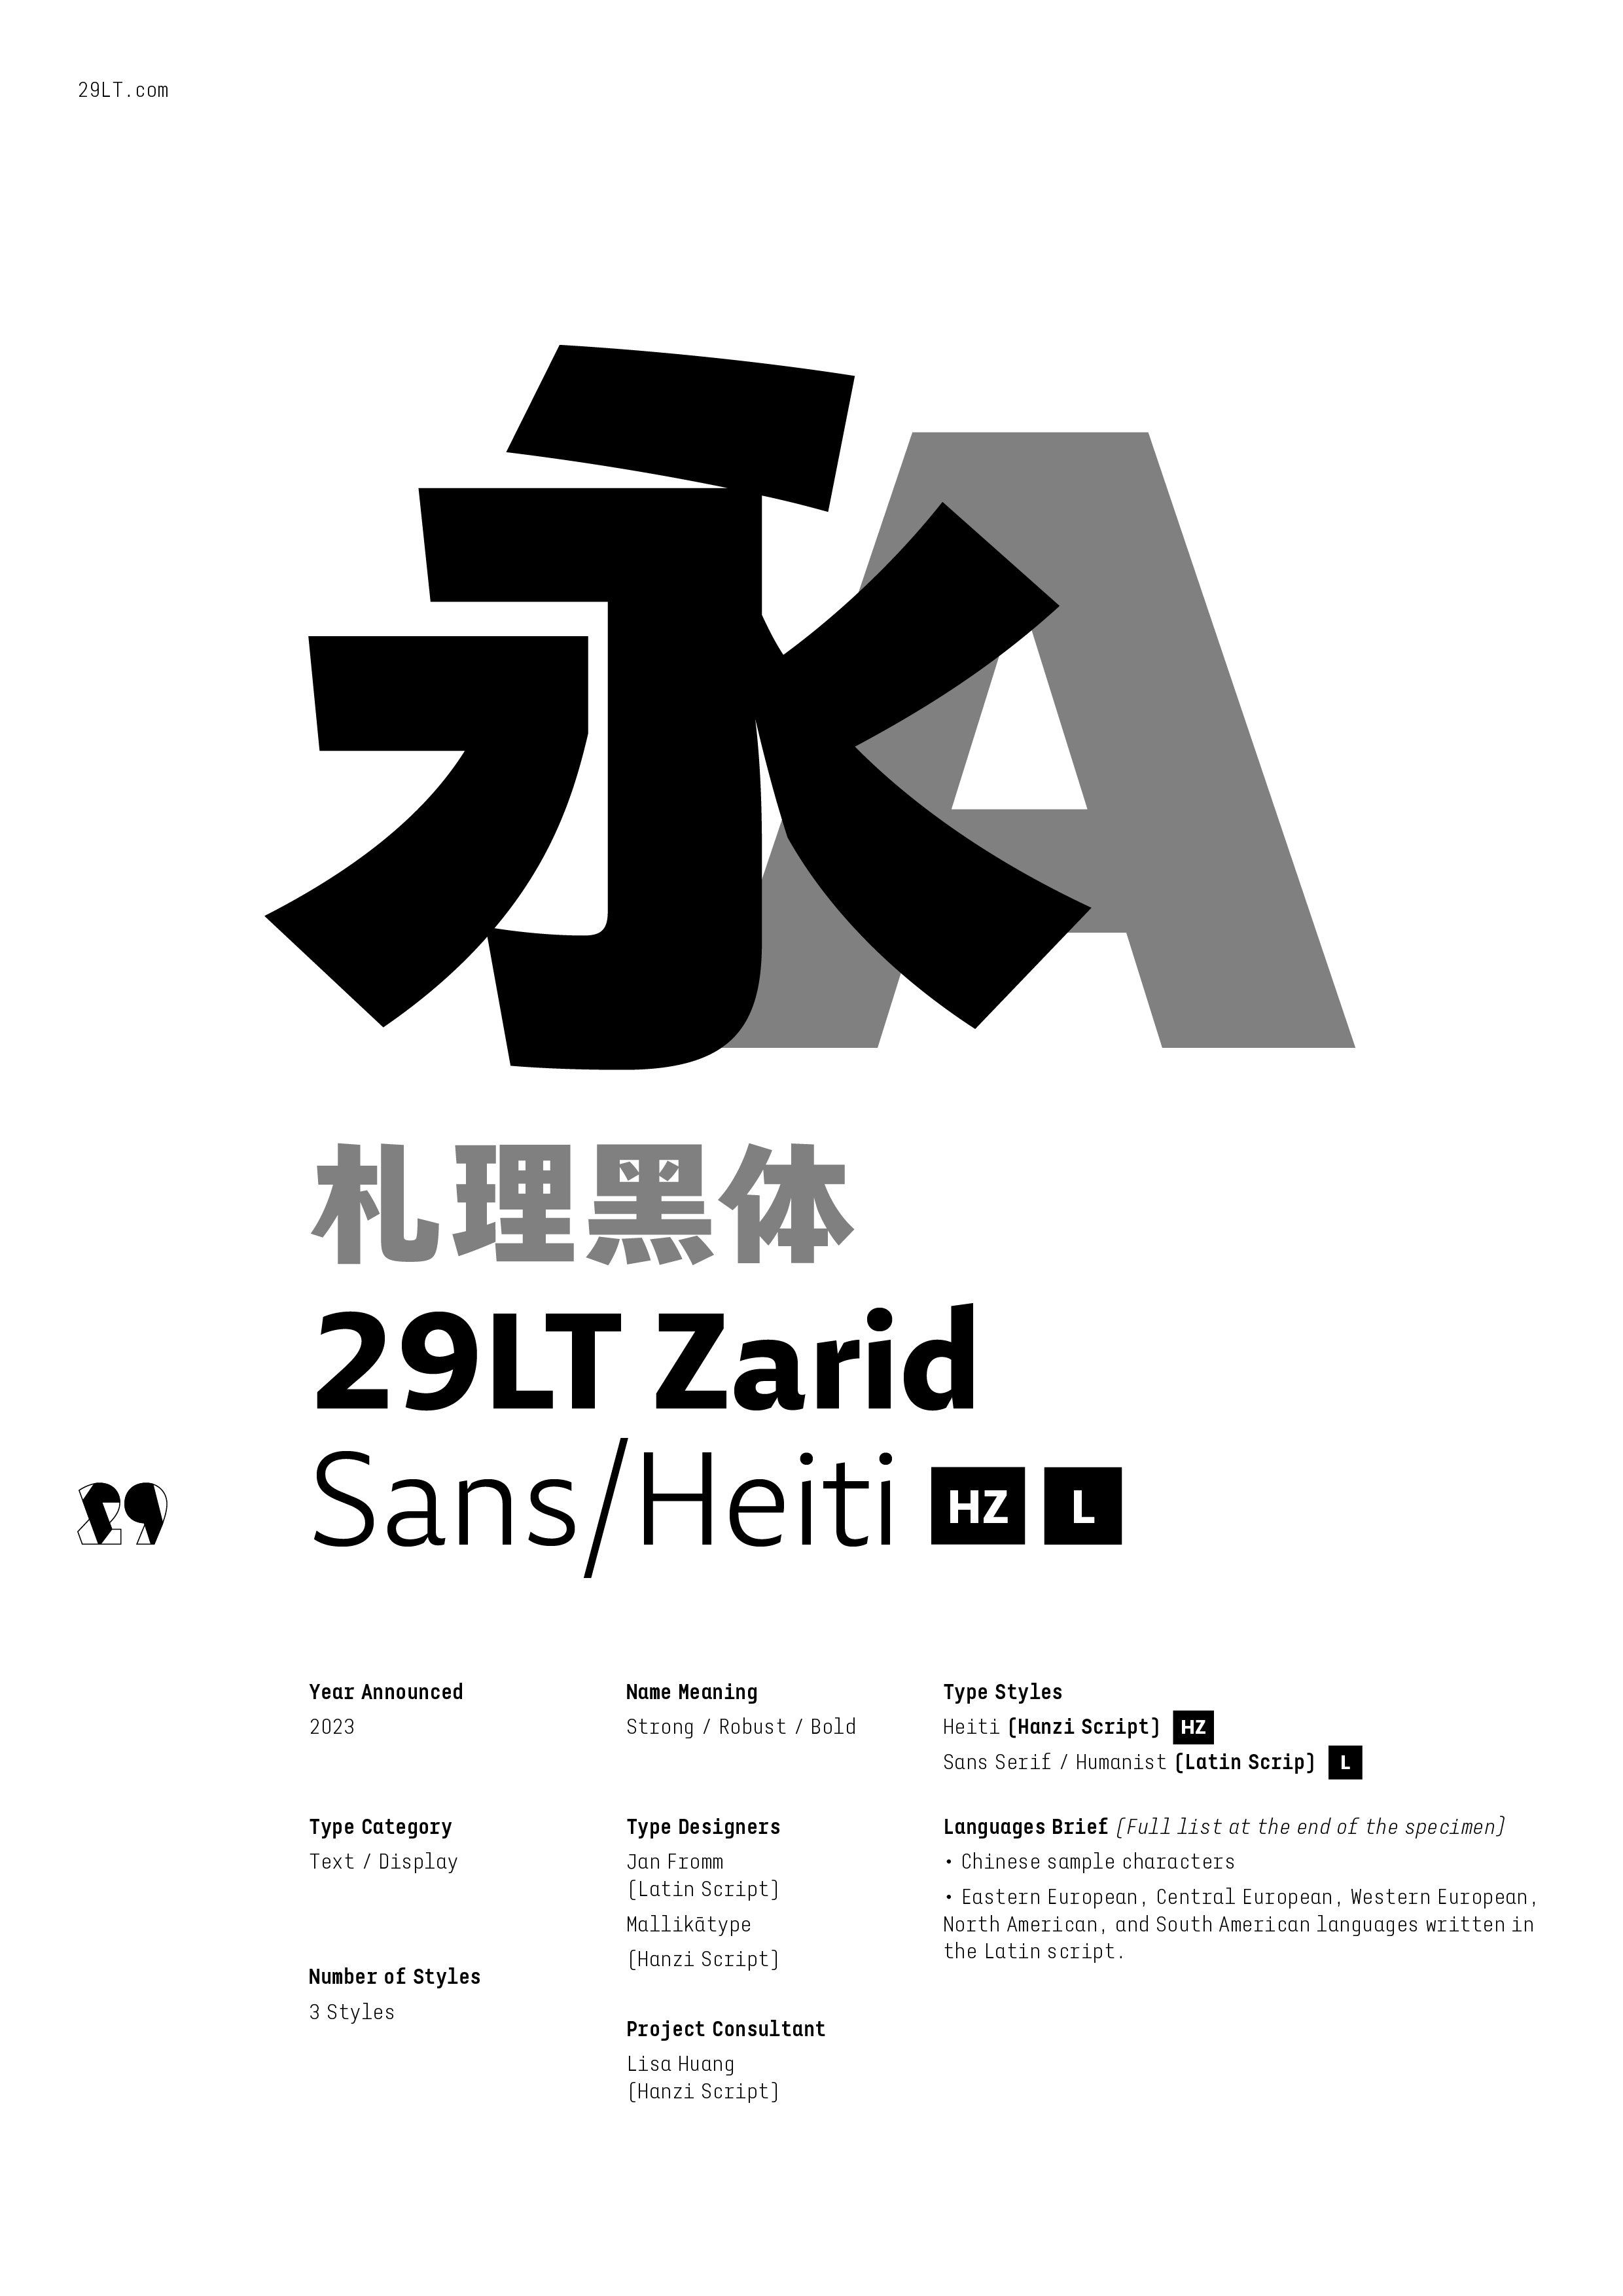 29LT Zarid Sans HZL-PDF1